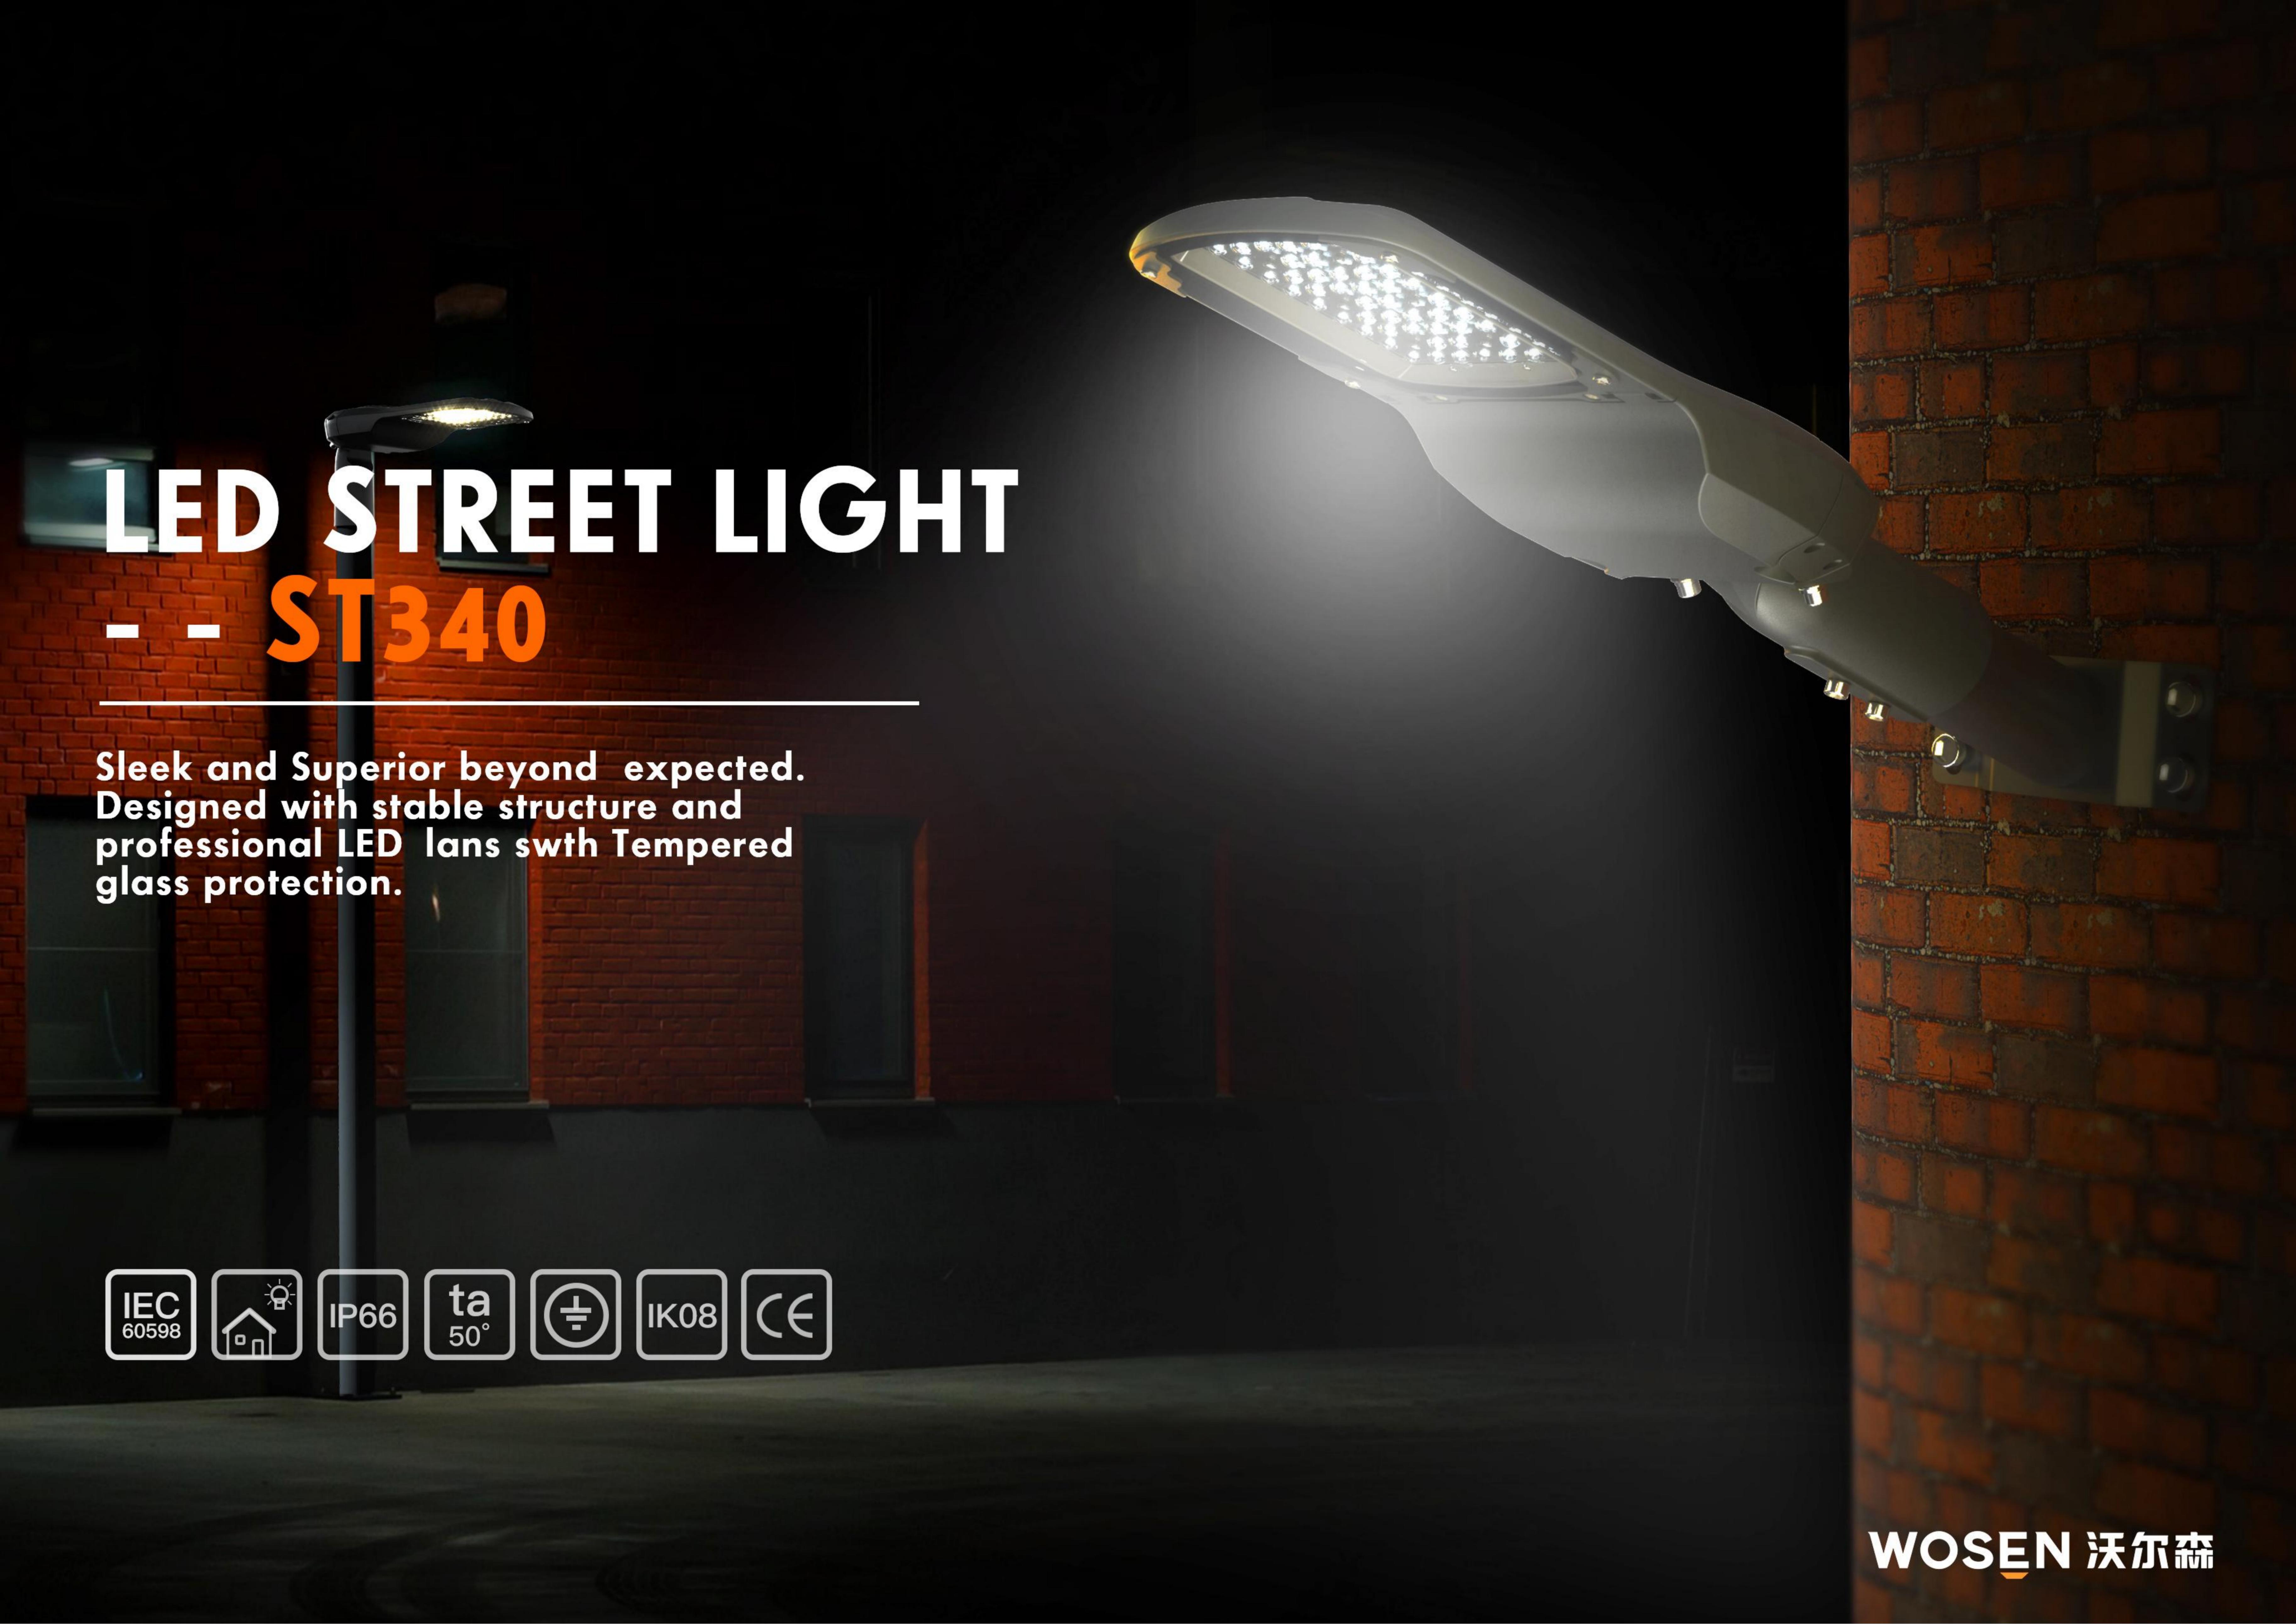 LED tooless street light company